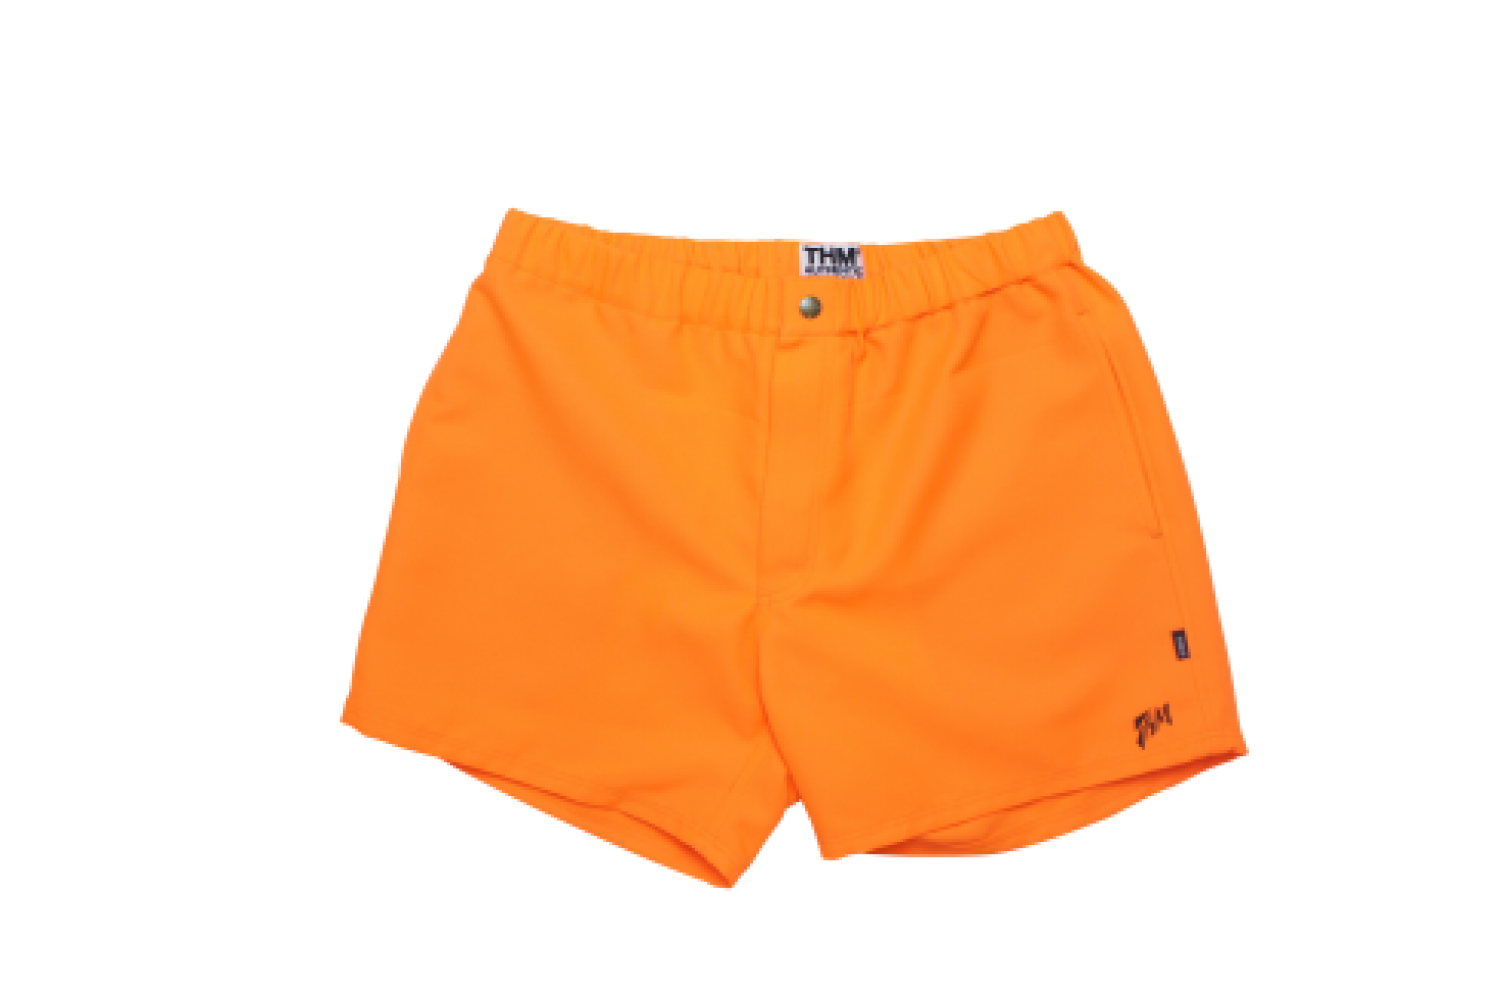 2023 [THE HARD MAN] Neon shorts Orange